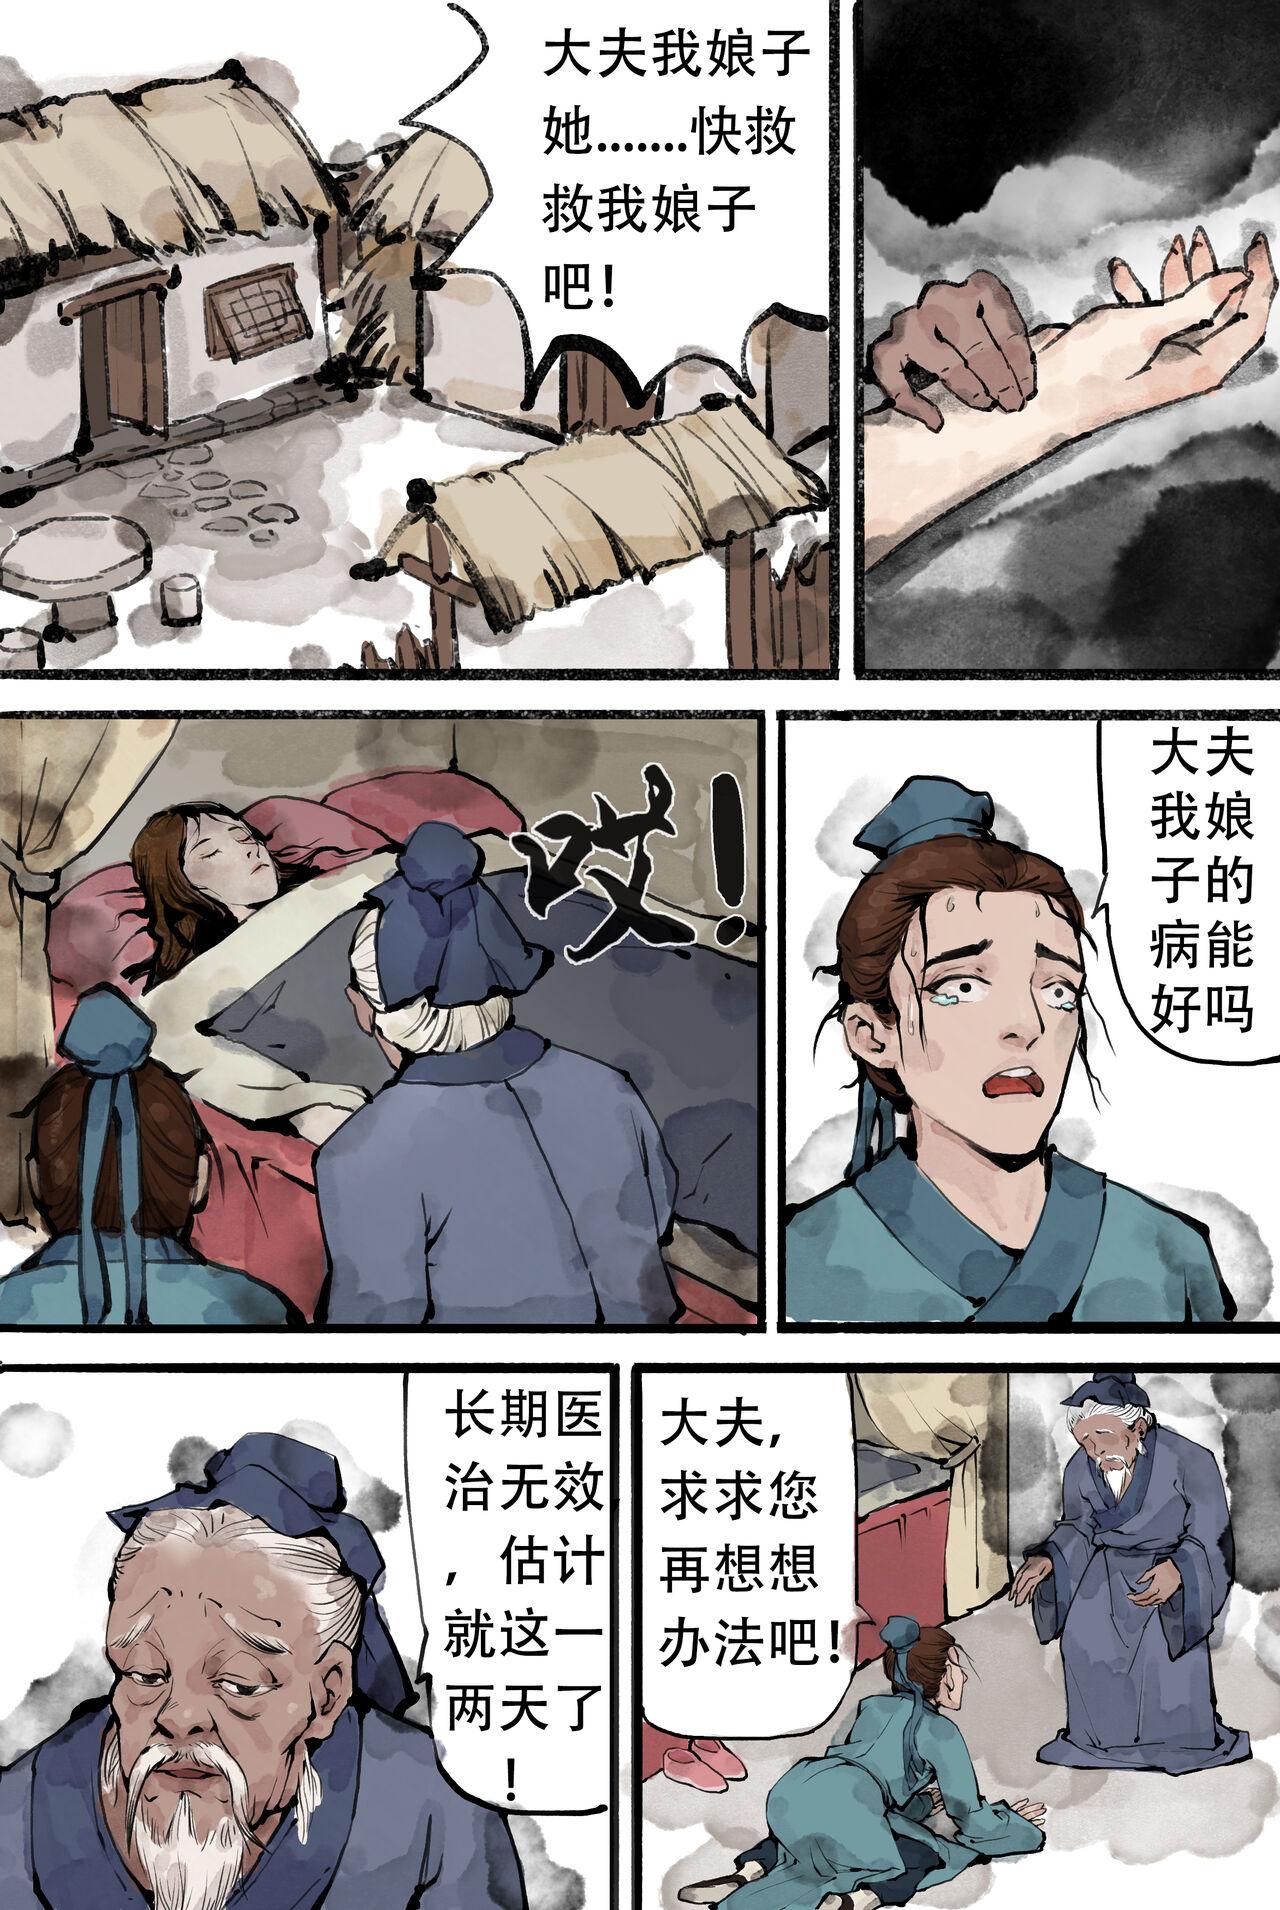 3some 采药救妻 - Original Gang - Page 2